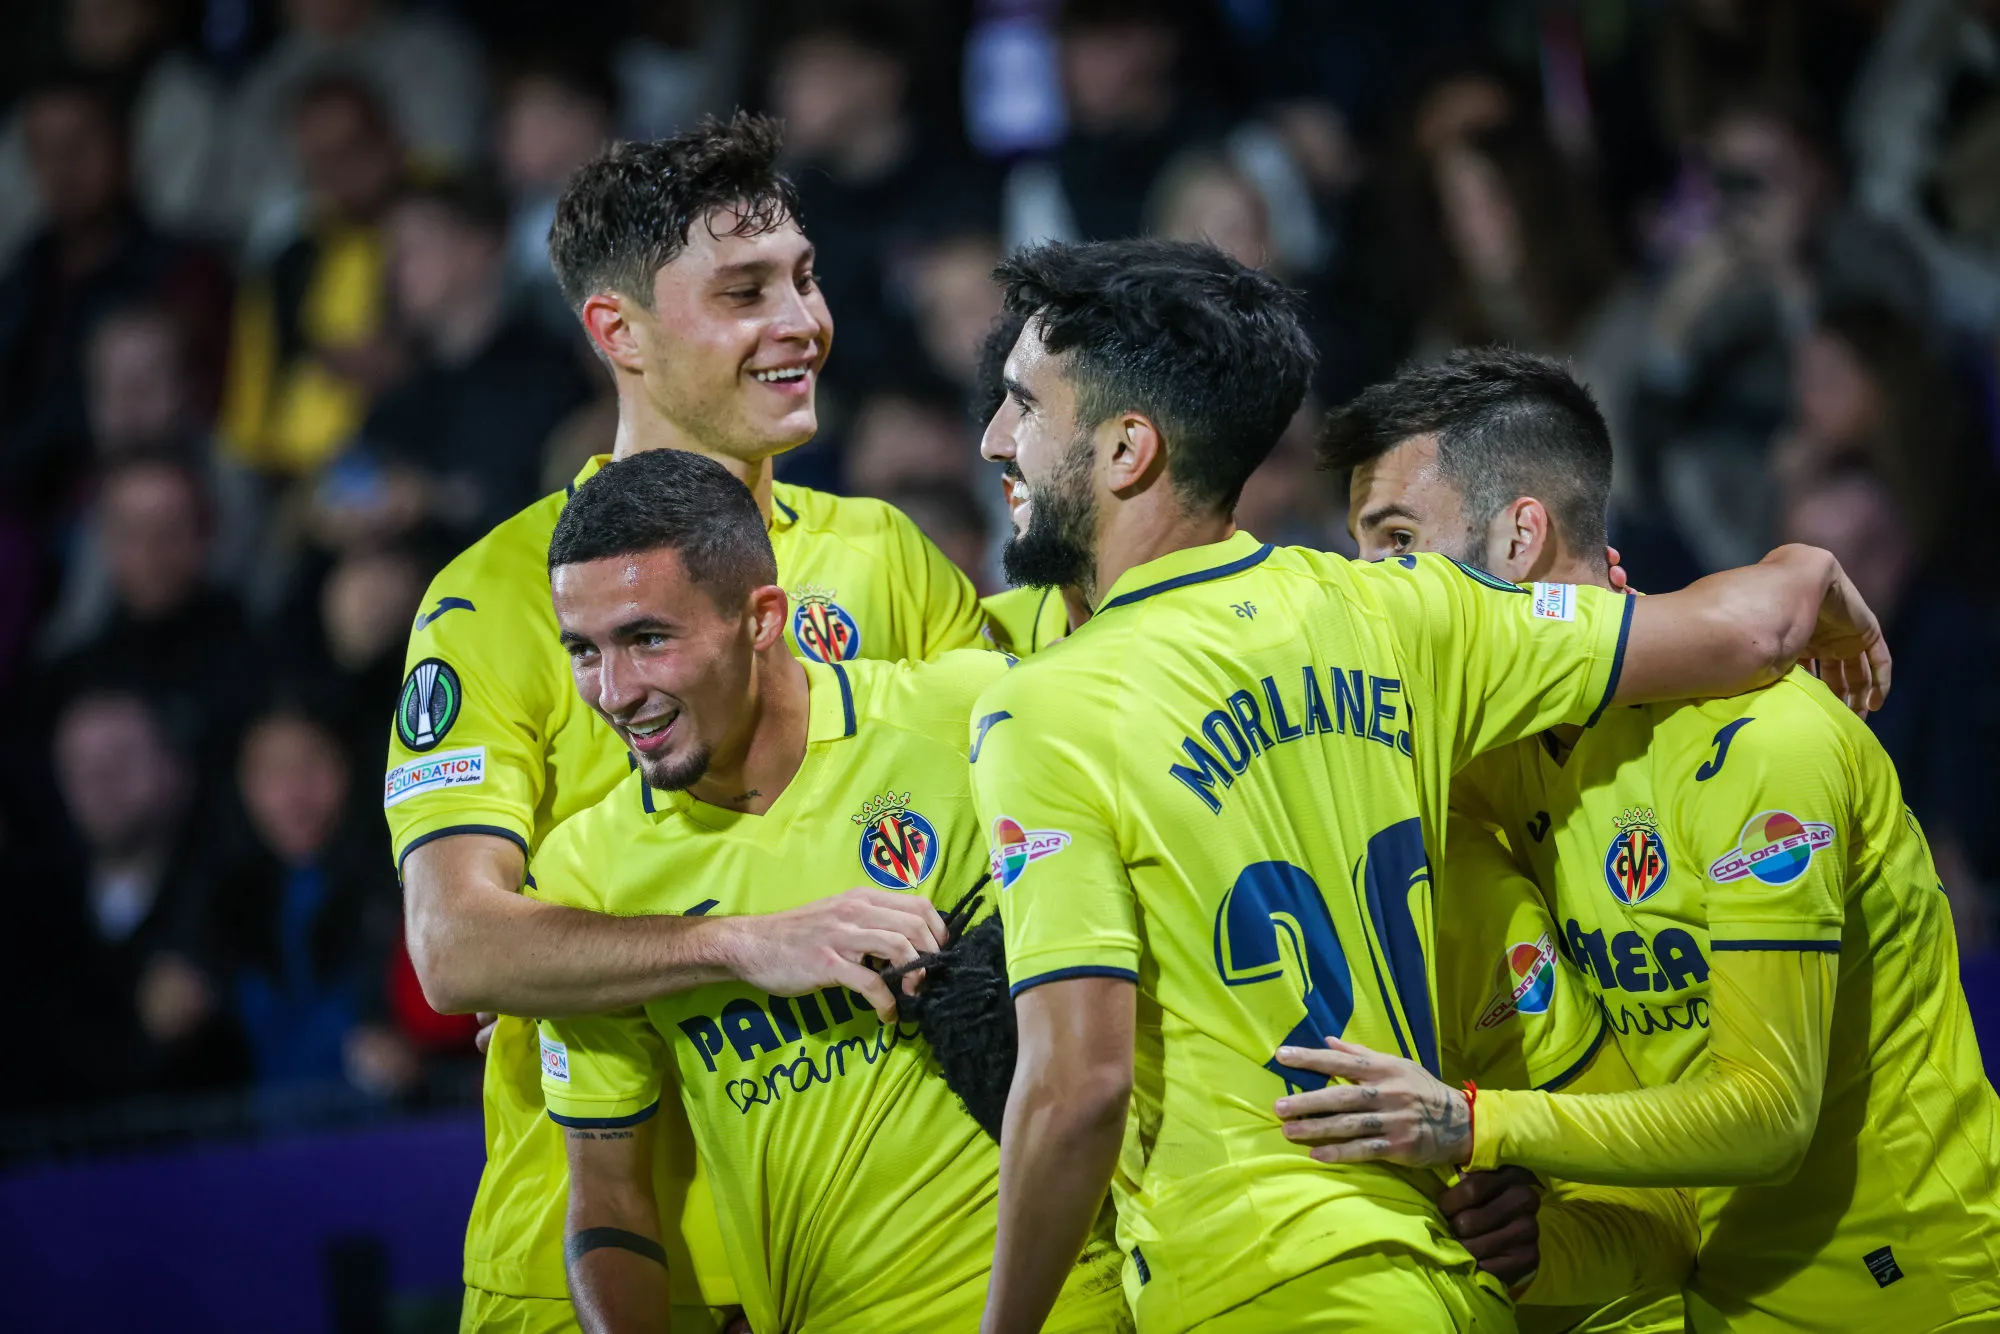 Pronostic Villarreal Osasuna : Analyse, cotes et prono du match de Liga